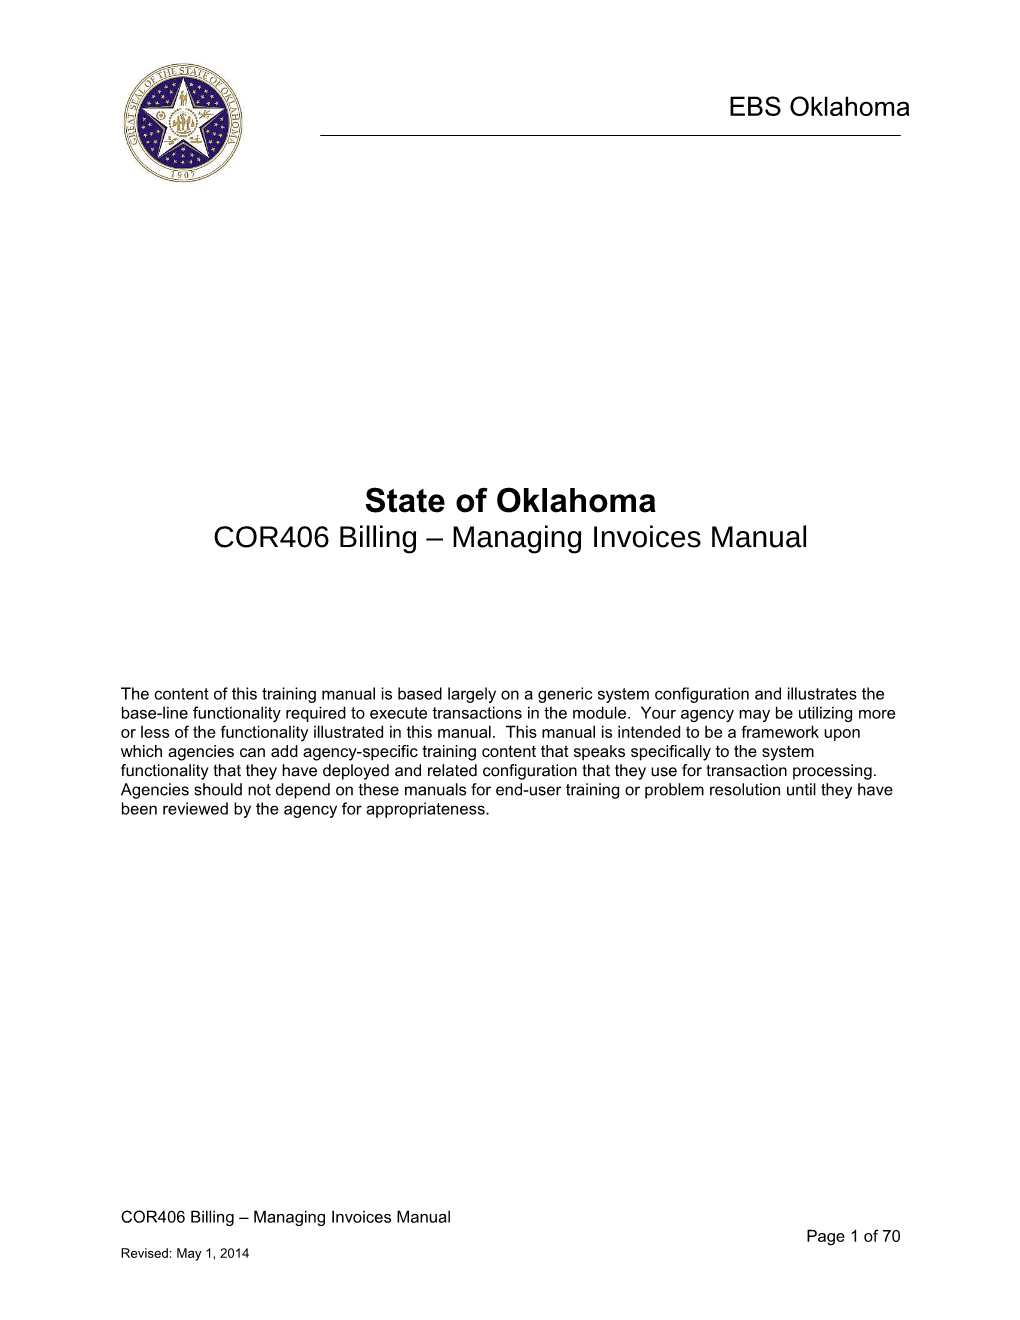 COR406 Billing Managing Invoices Manual